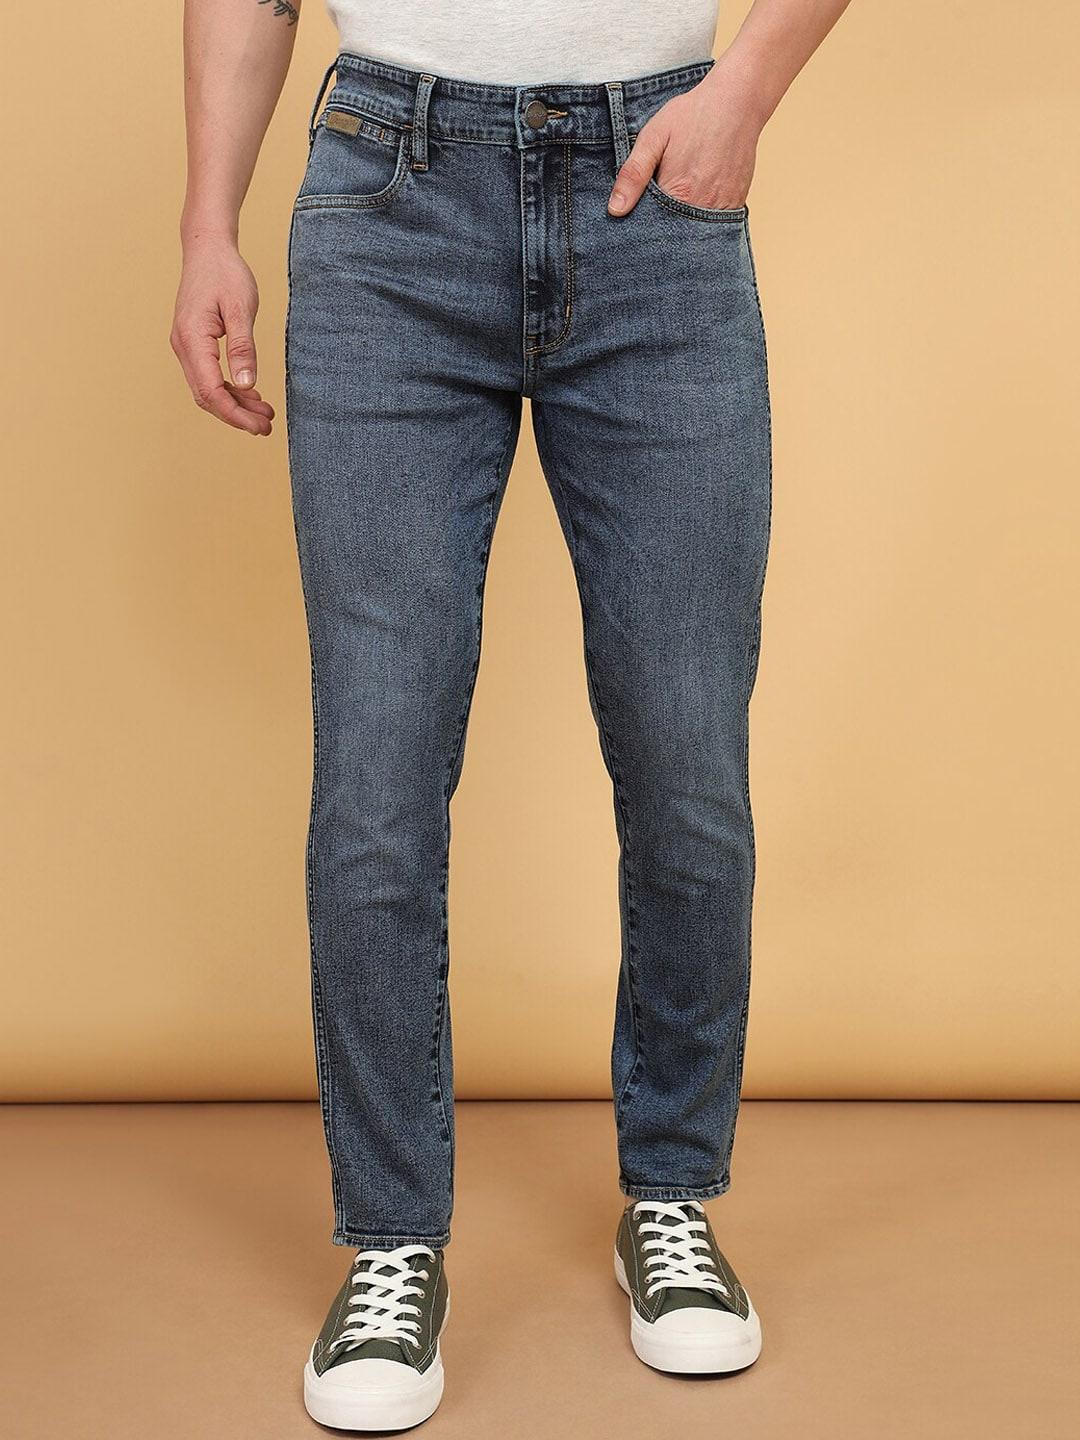 wrangler-men-bostin-slim-fit-clean-look-light-fade-stretchable-jeans